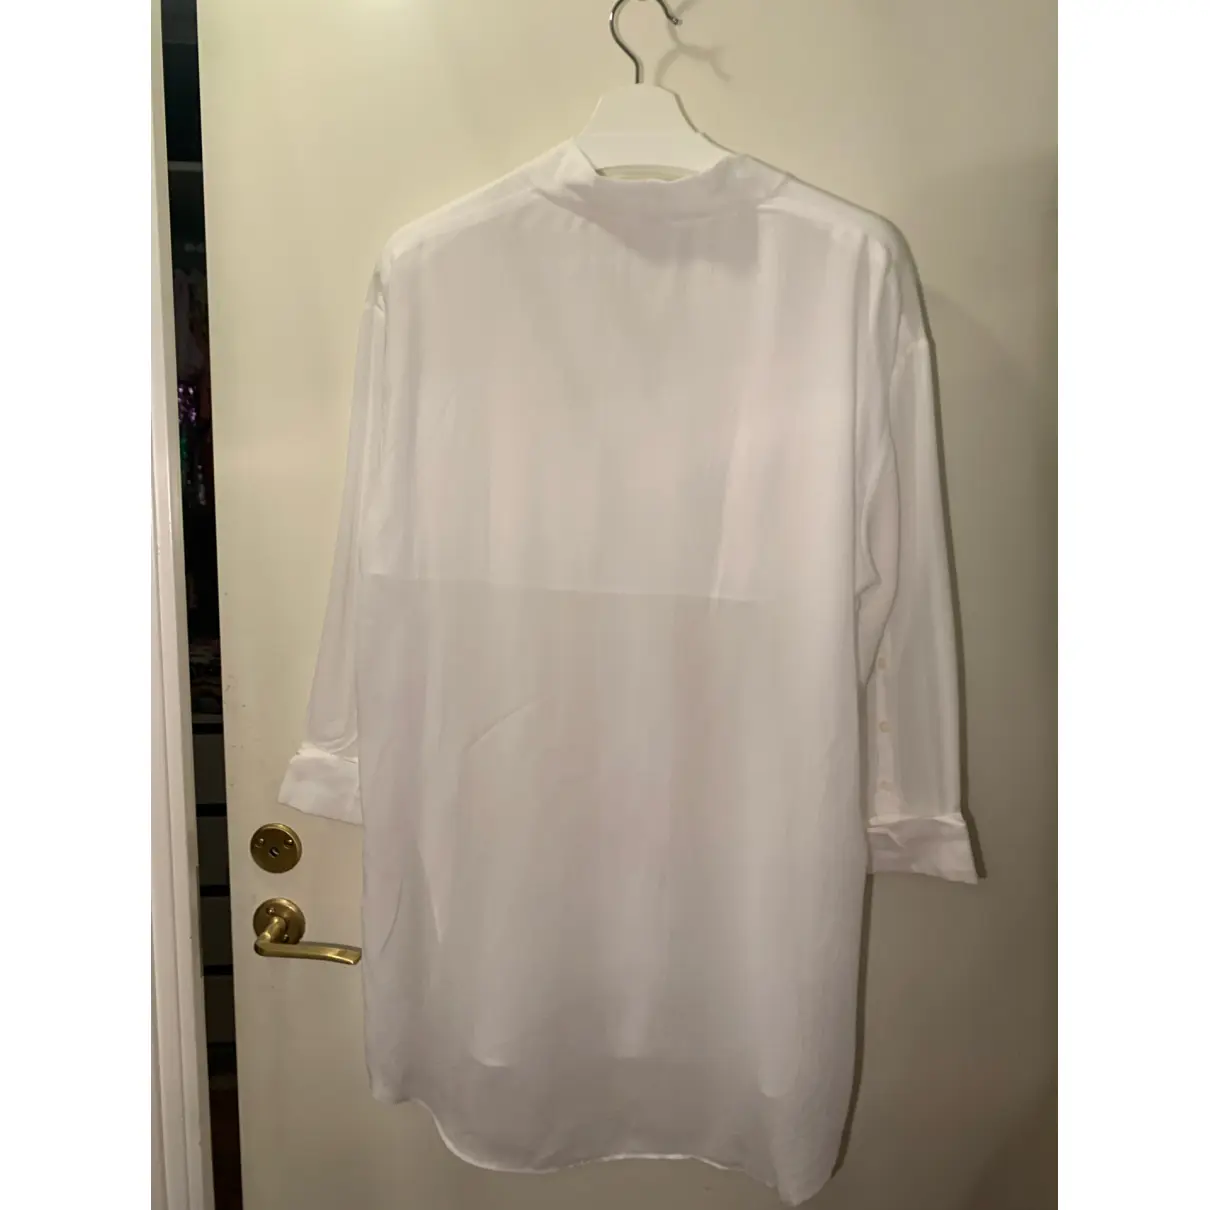 Buy Helmut Lang Silk blouse online